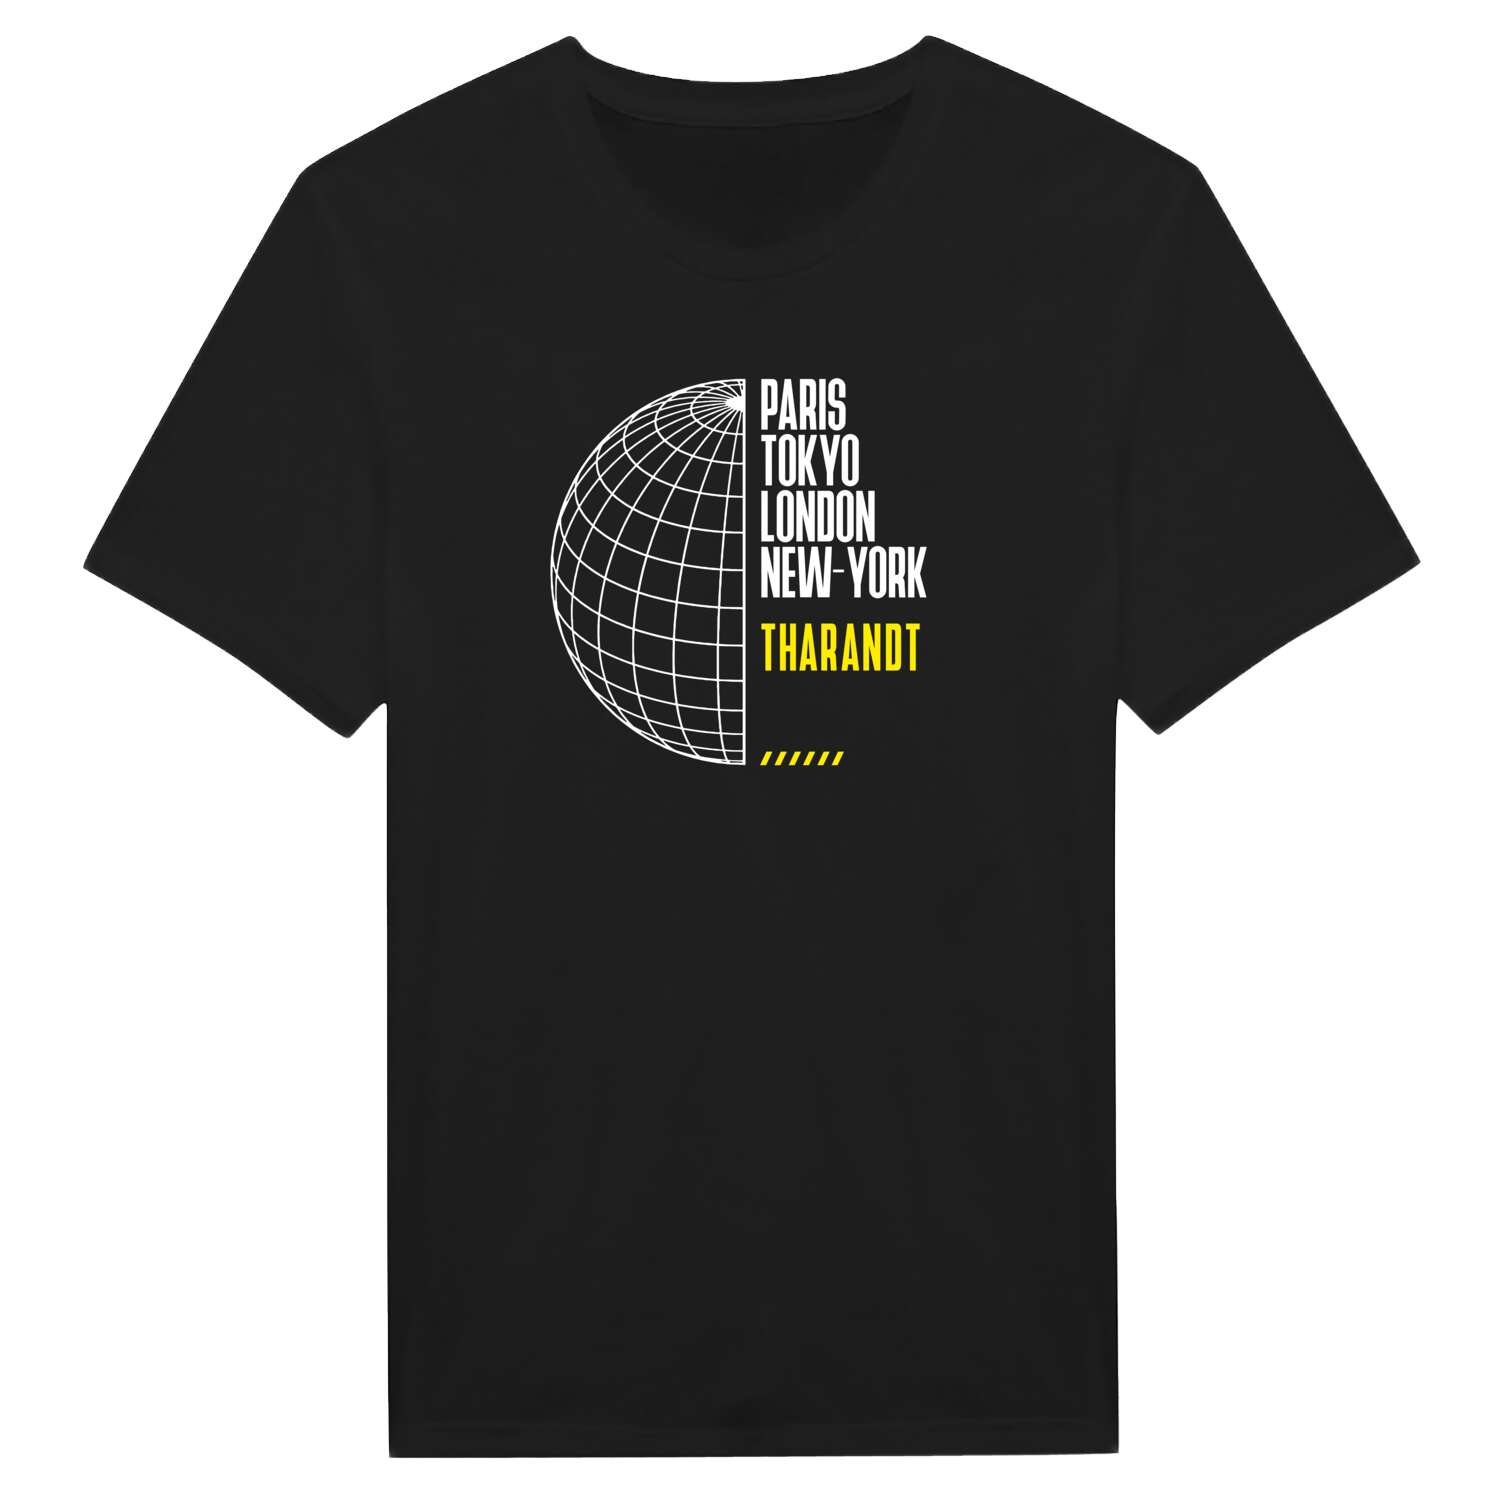 Tharandt T-Shirt »Paris Tokyo London«